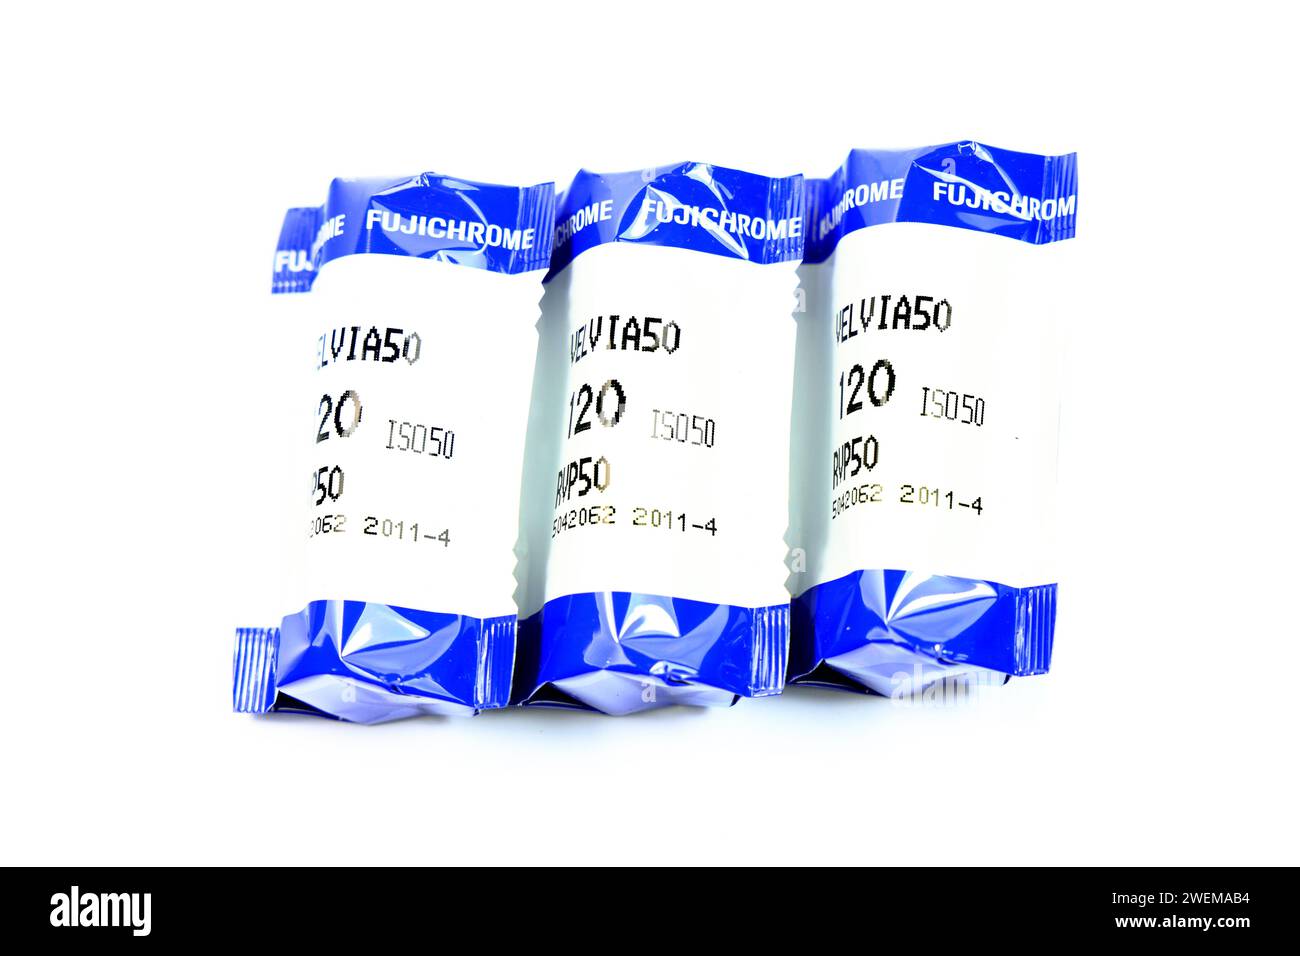 Three rolls of 120 Fujichrome Velvia film. Stock Photo